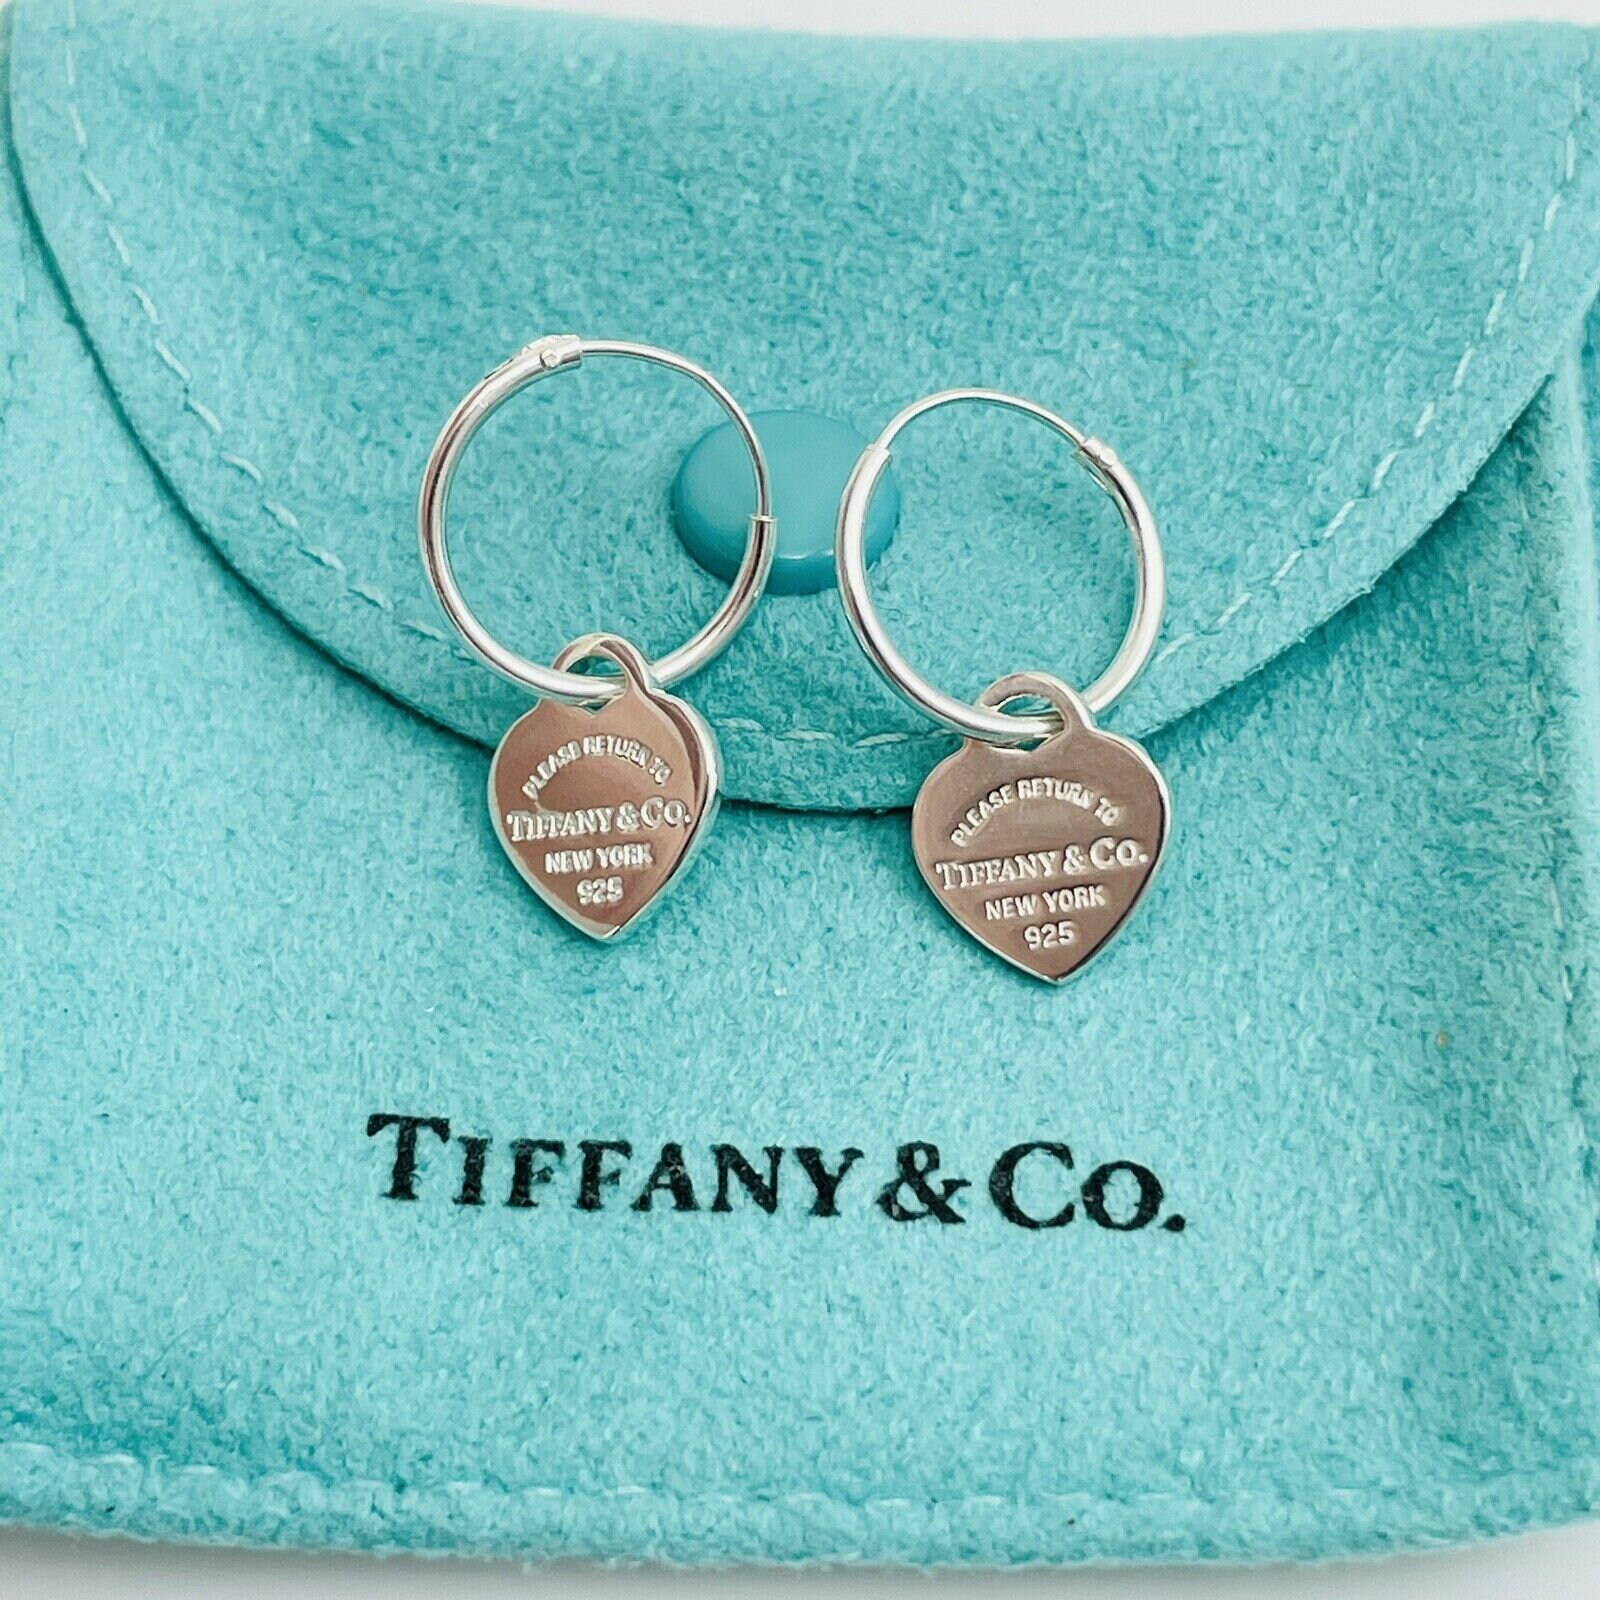 Return to Tiffany® Hoop Earrings in Sterling Silver with Diamonds